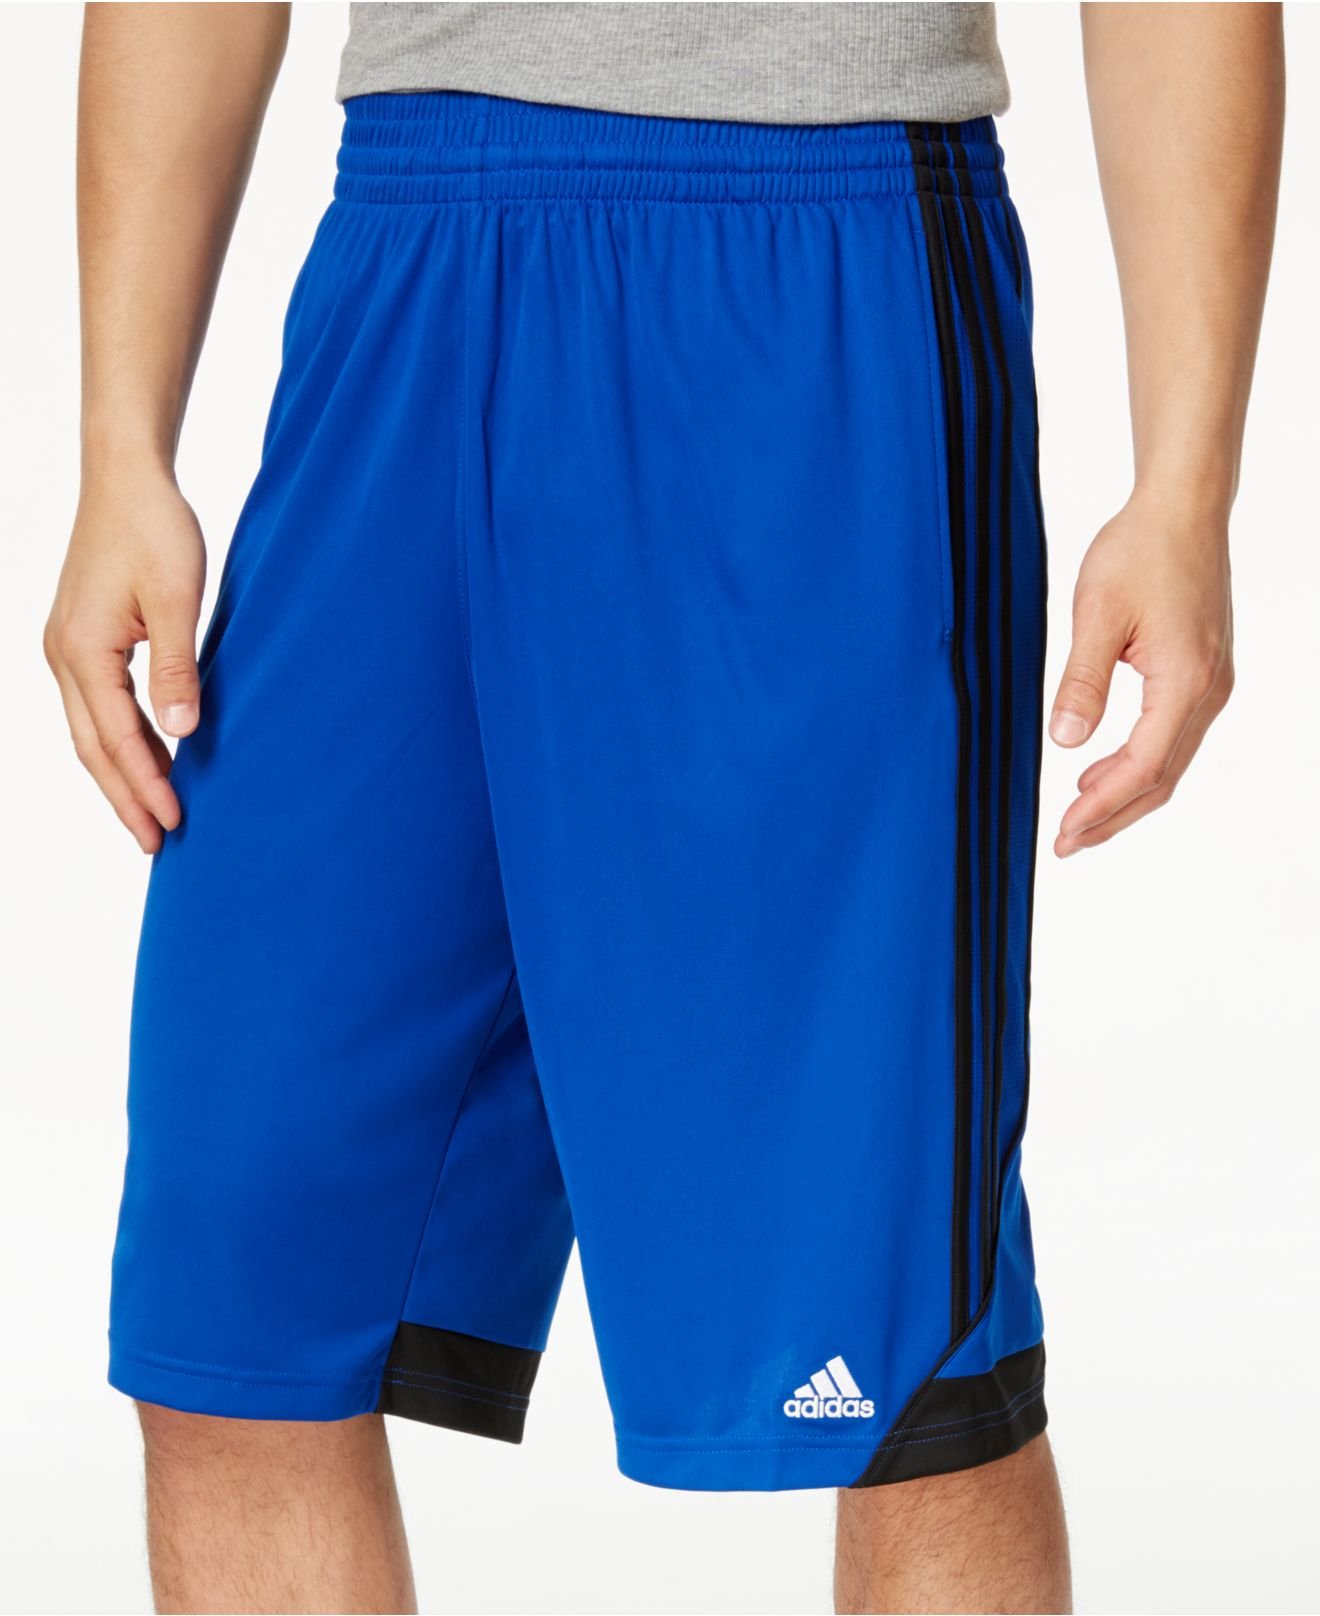 Lyst - Adidas Originals Men's 3g Speed 2.0 Basketball Shorts in Blue